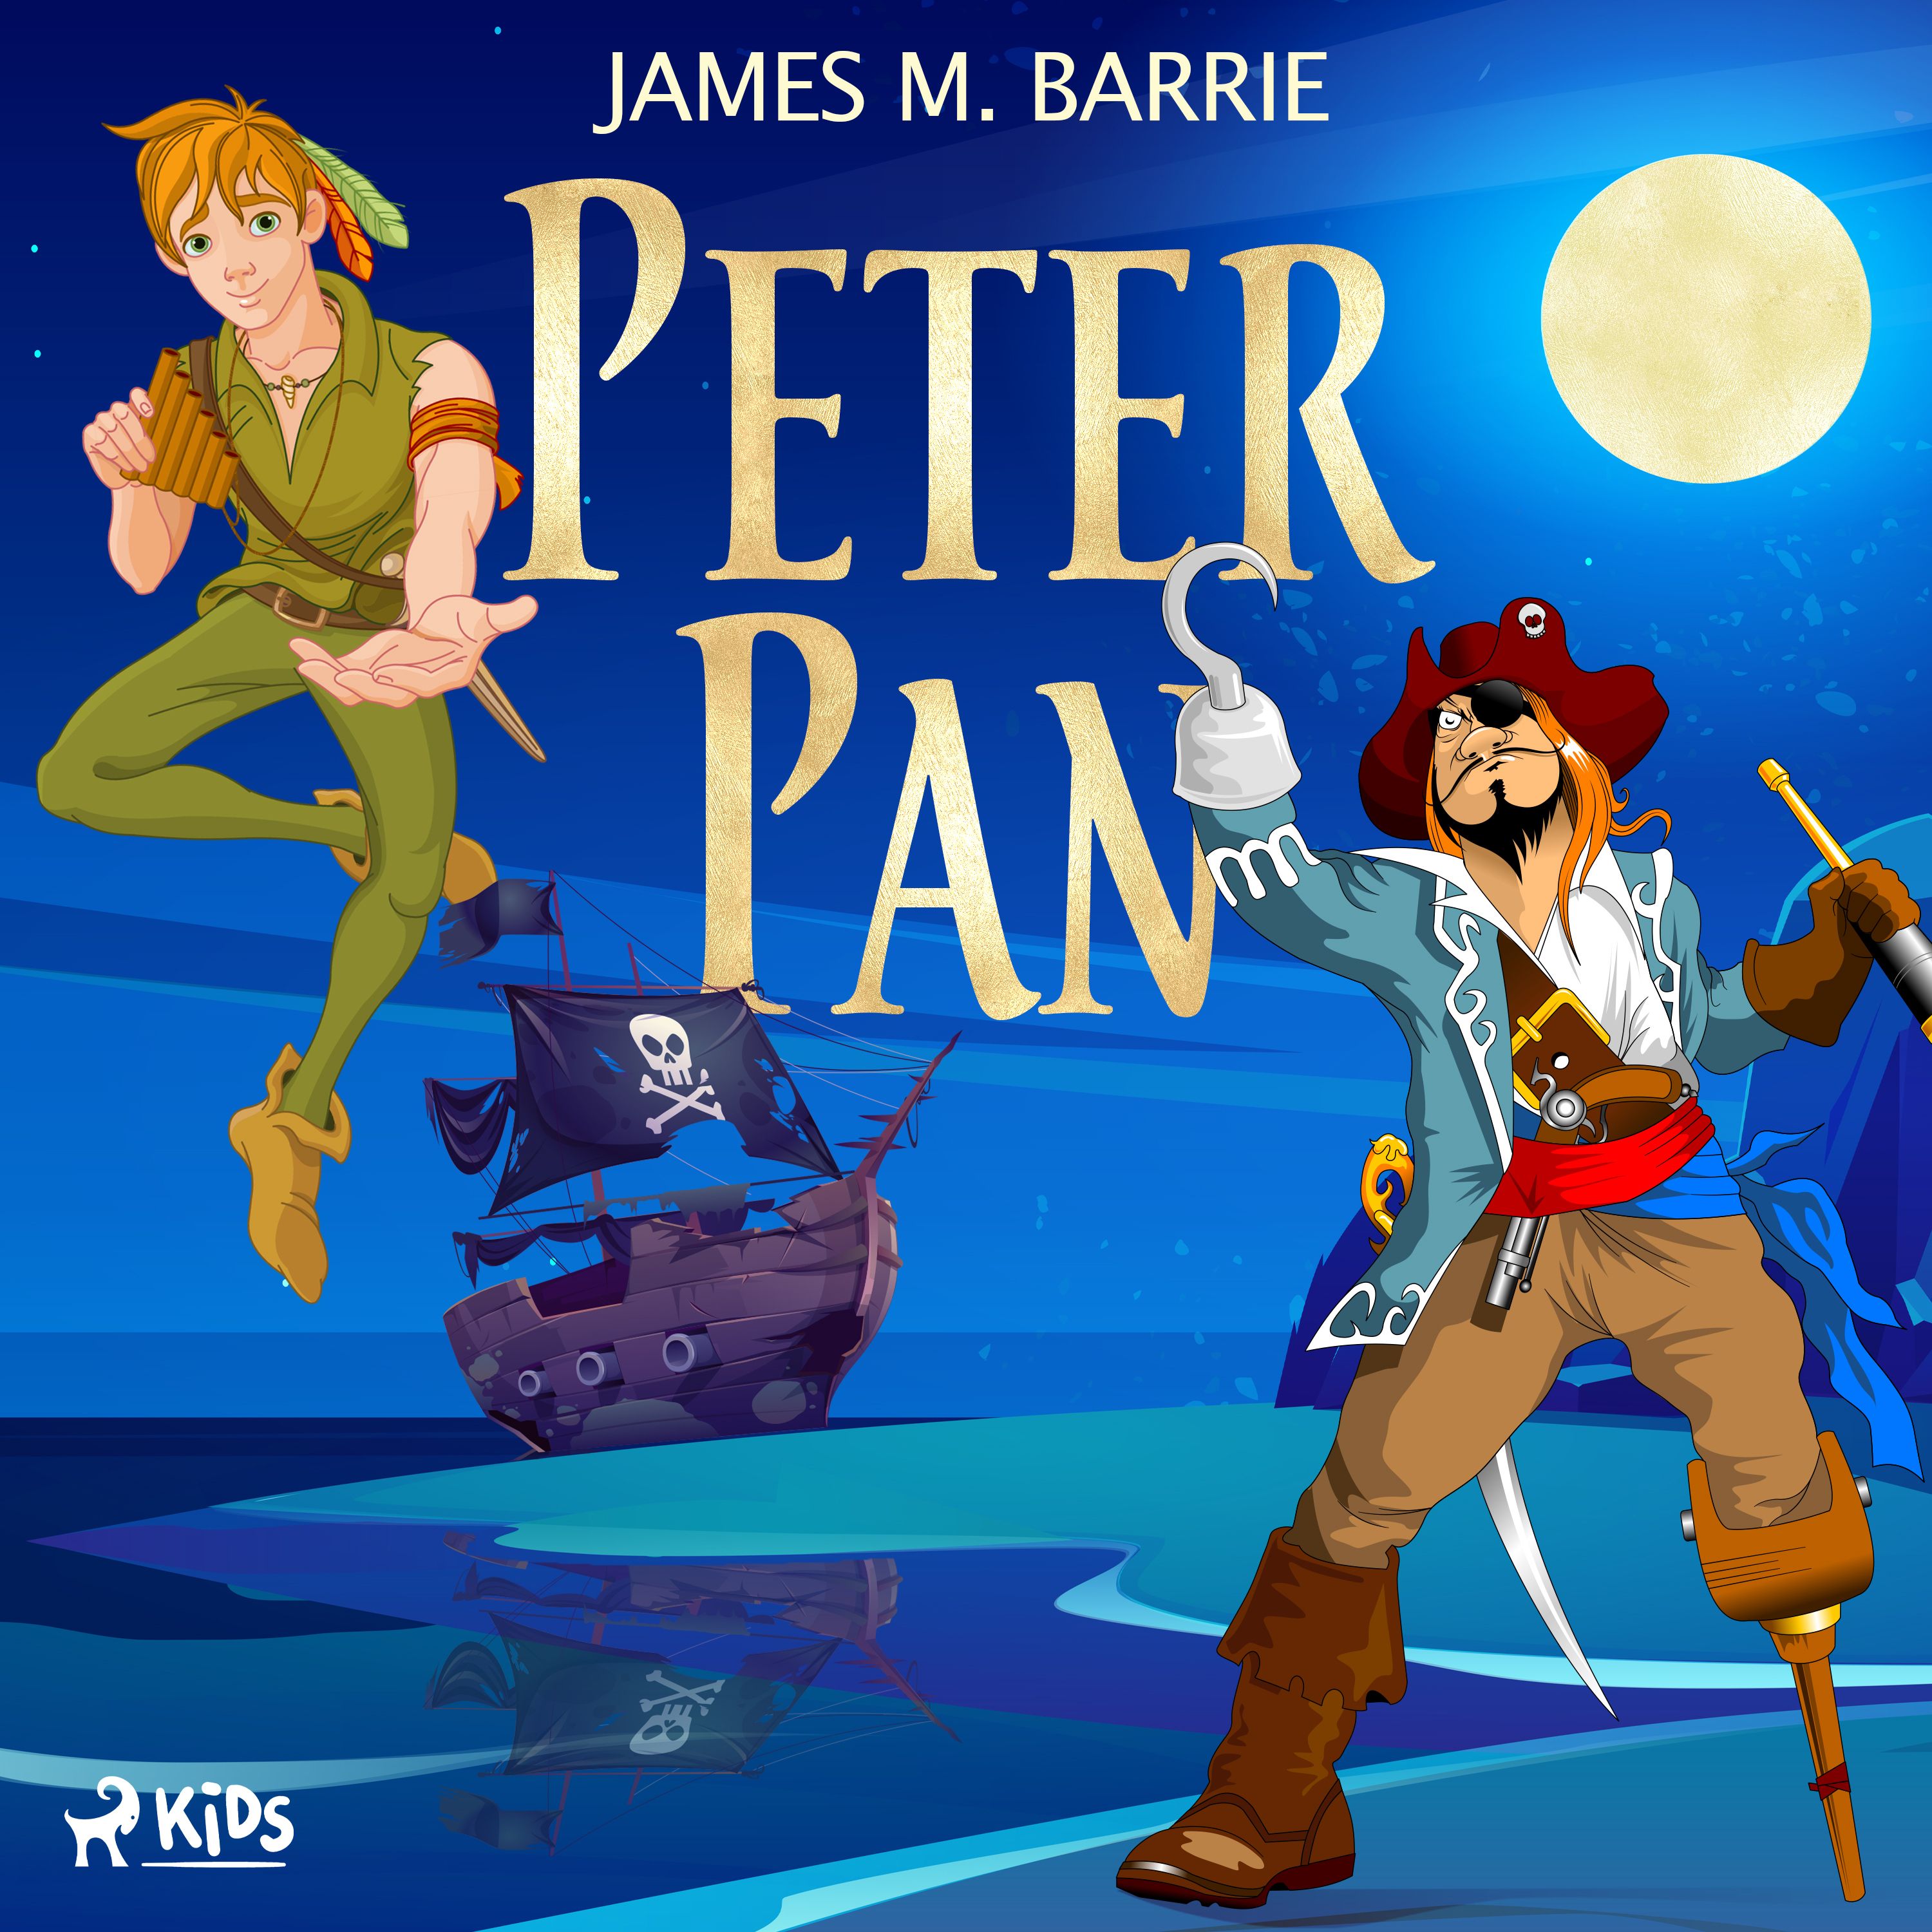 Peter Pan, ljudbok av J.M. Barrie